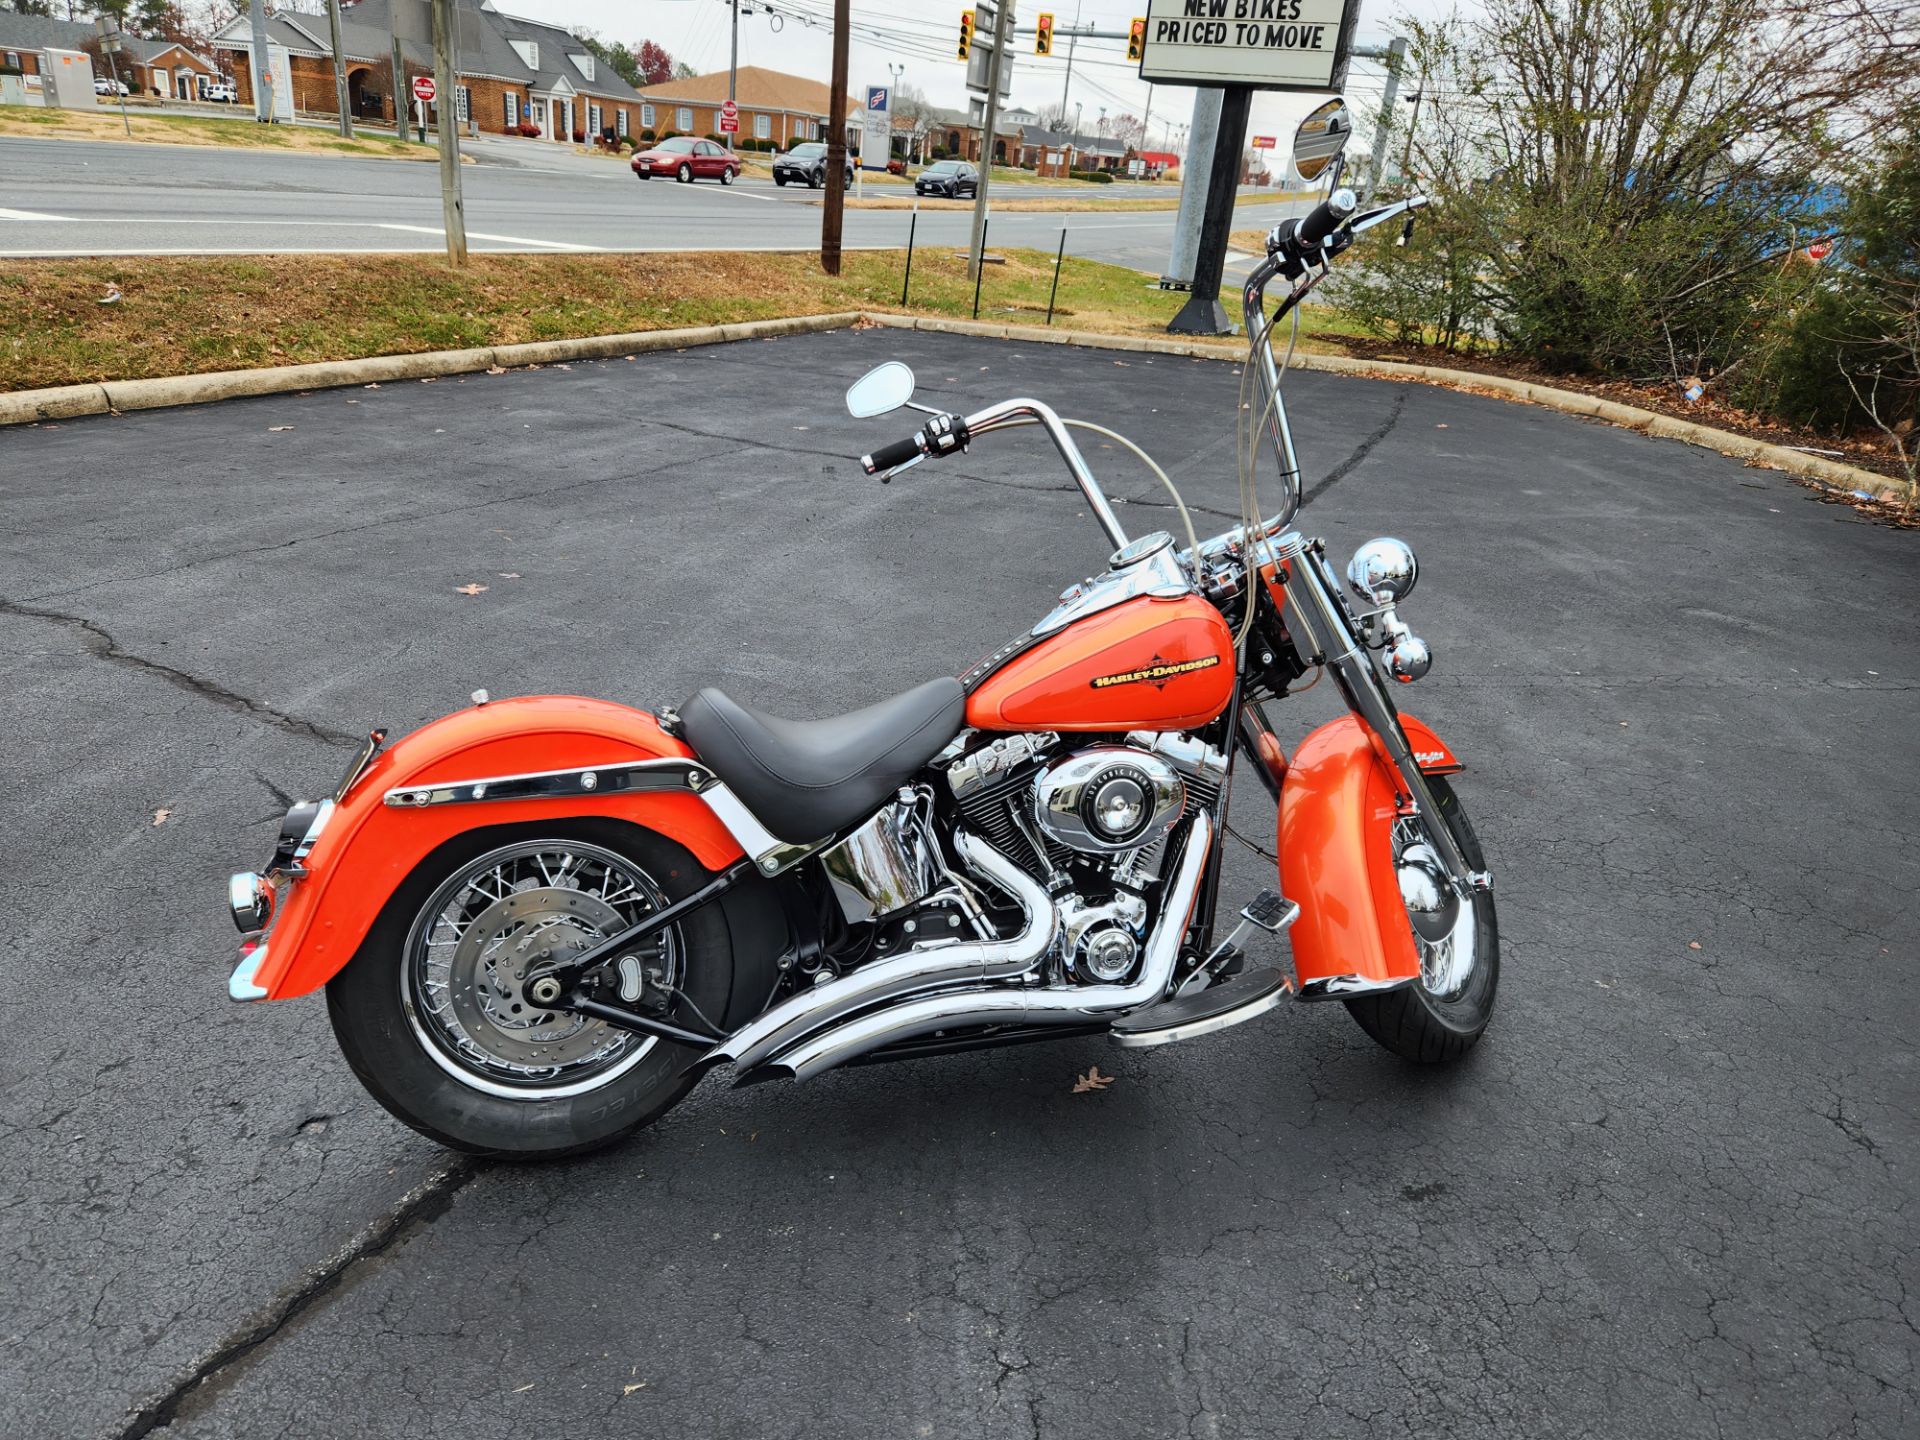 2012 Harley-Davidson Heritage Softail® Classic in Lynchburg, Virginia - Photo 12